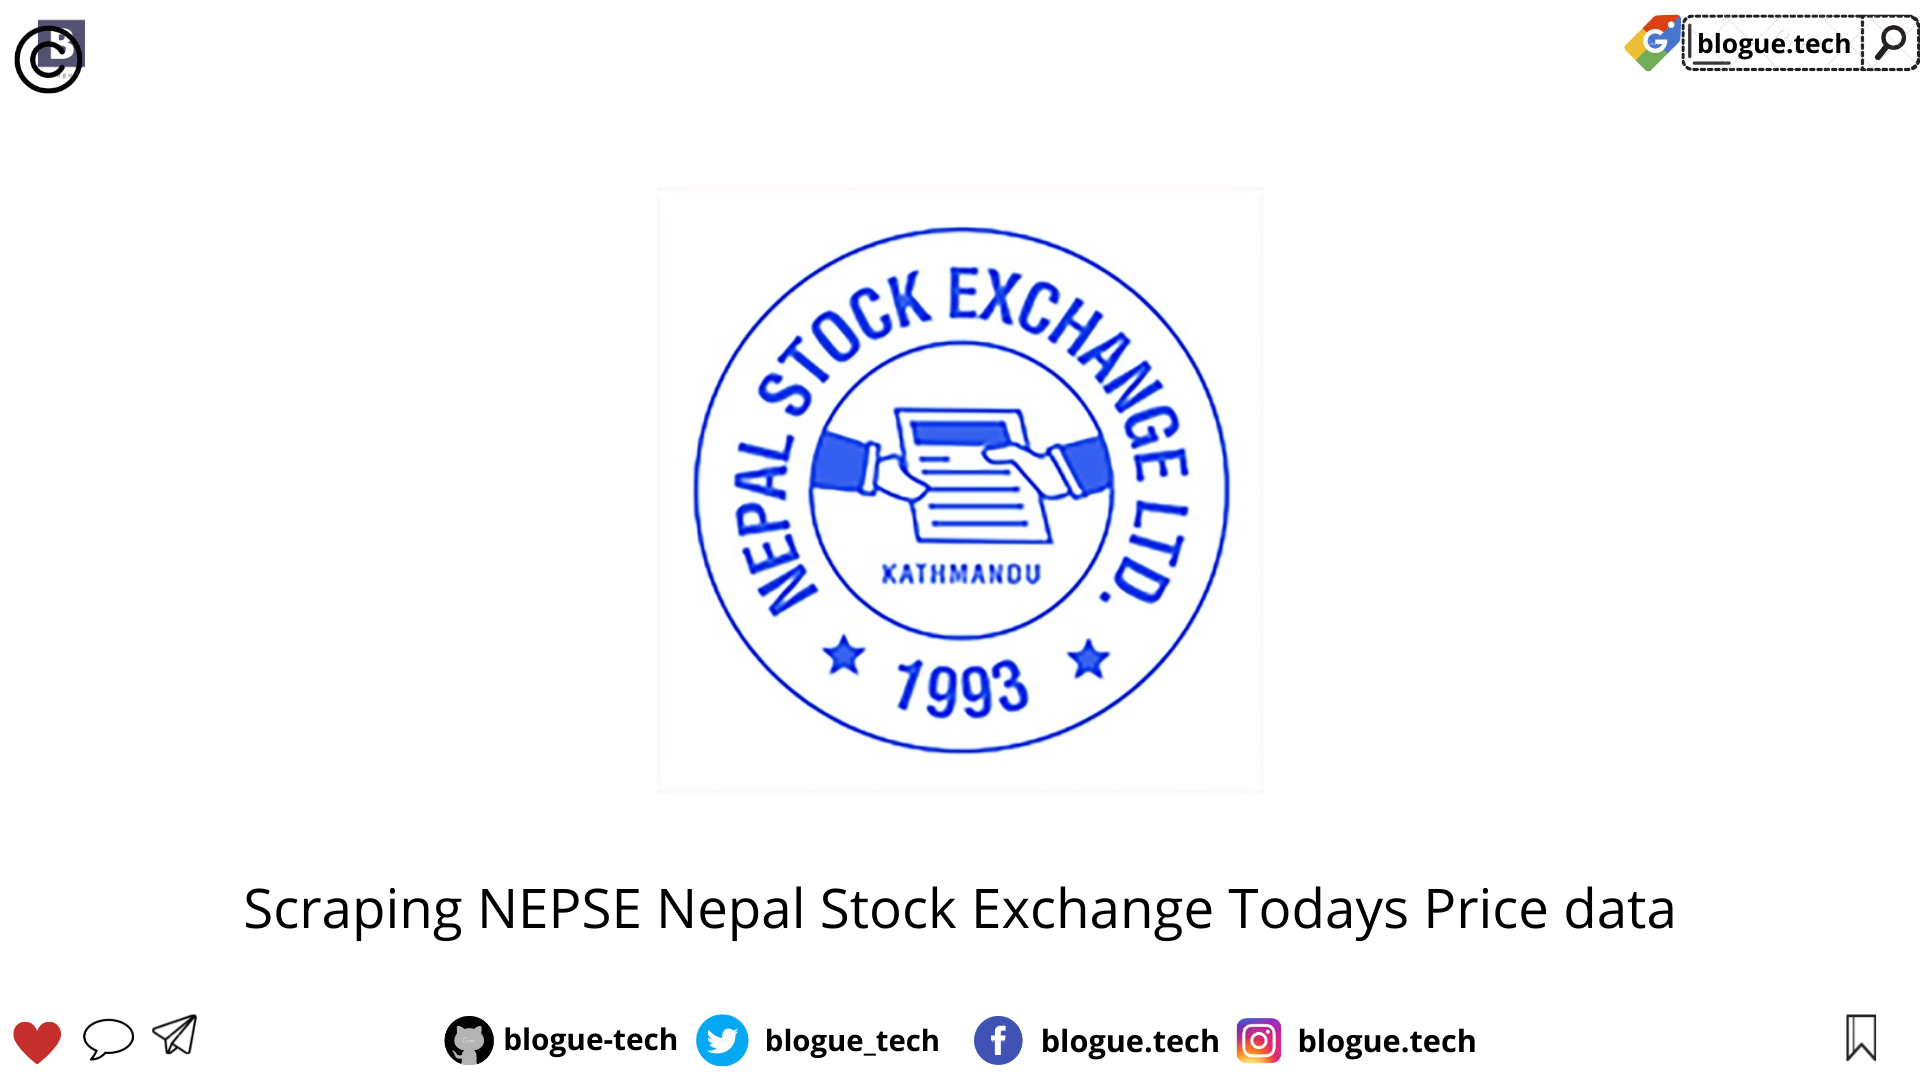 Scraping NEPSE Nepal Stock Exchange Todays Price data